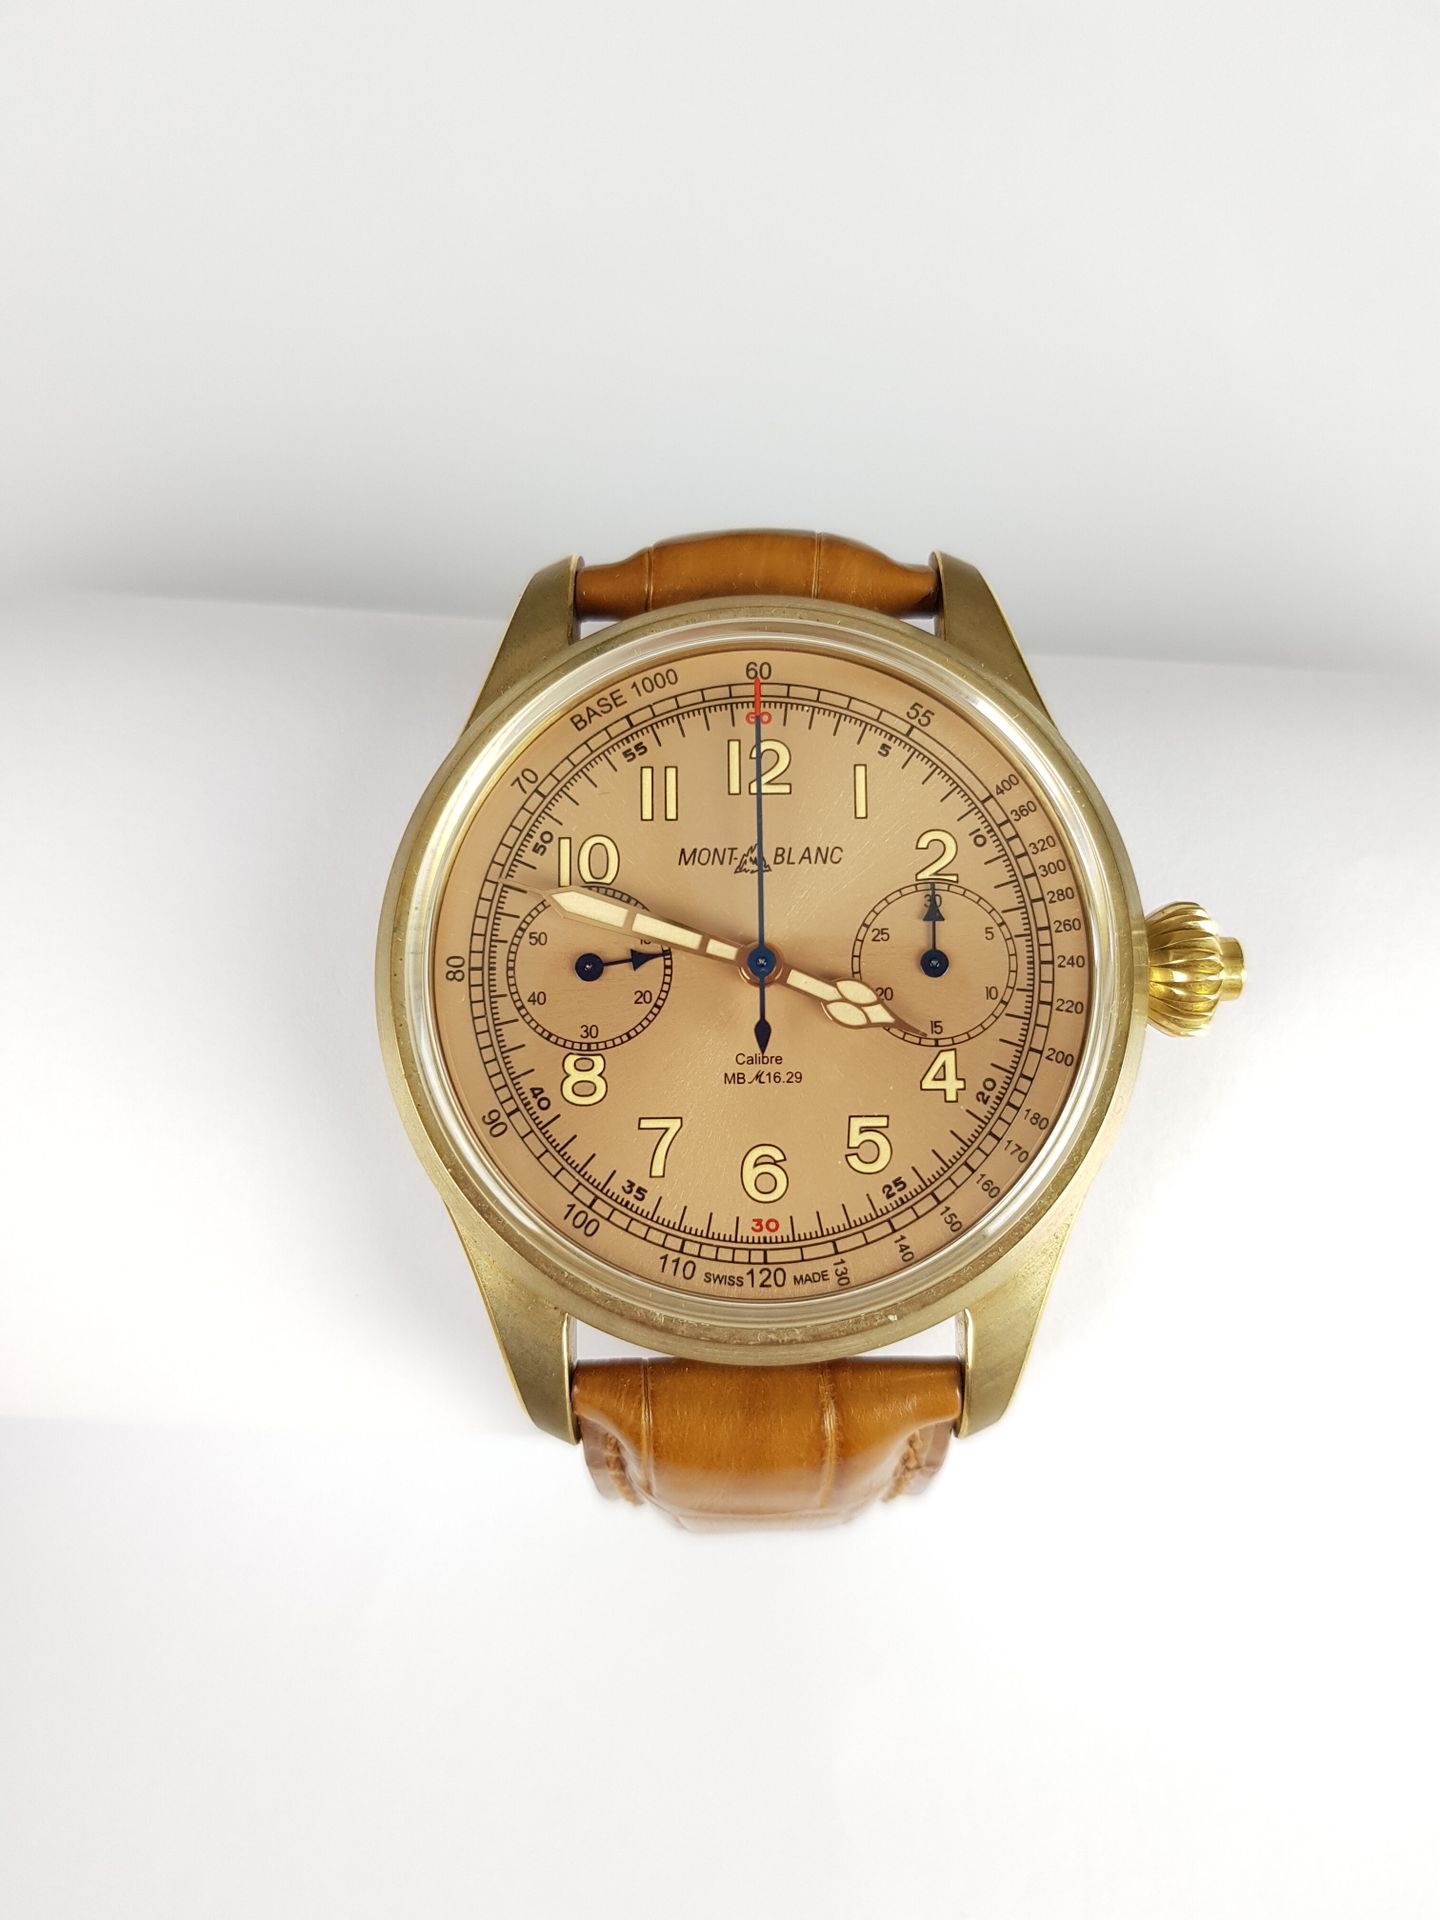 Null Starting price : 2 500 €.

MONTBLANC

Minerva

Chronograph watch, single pu&hellip;